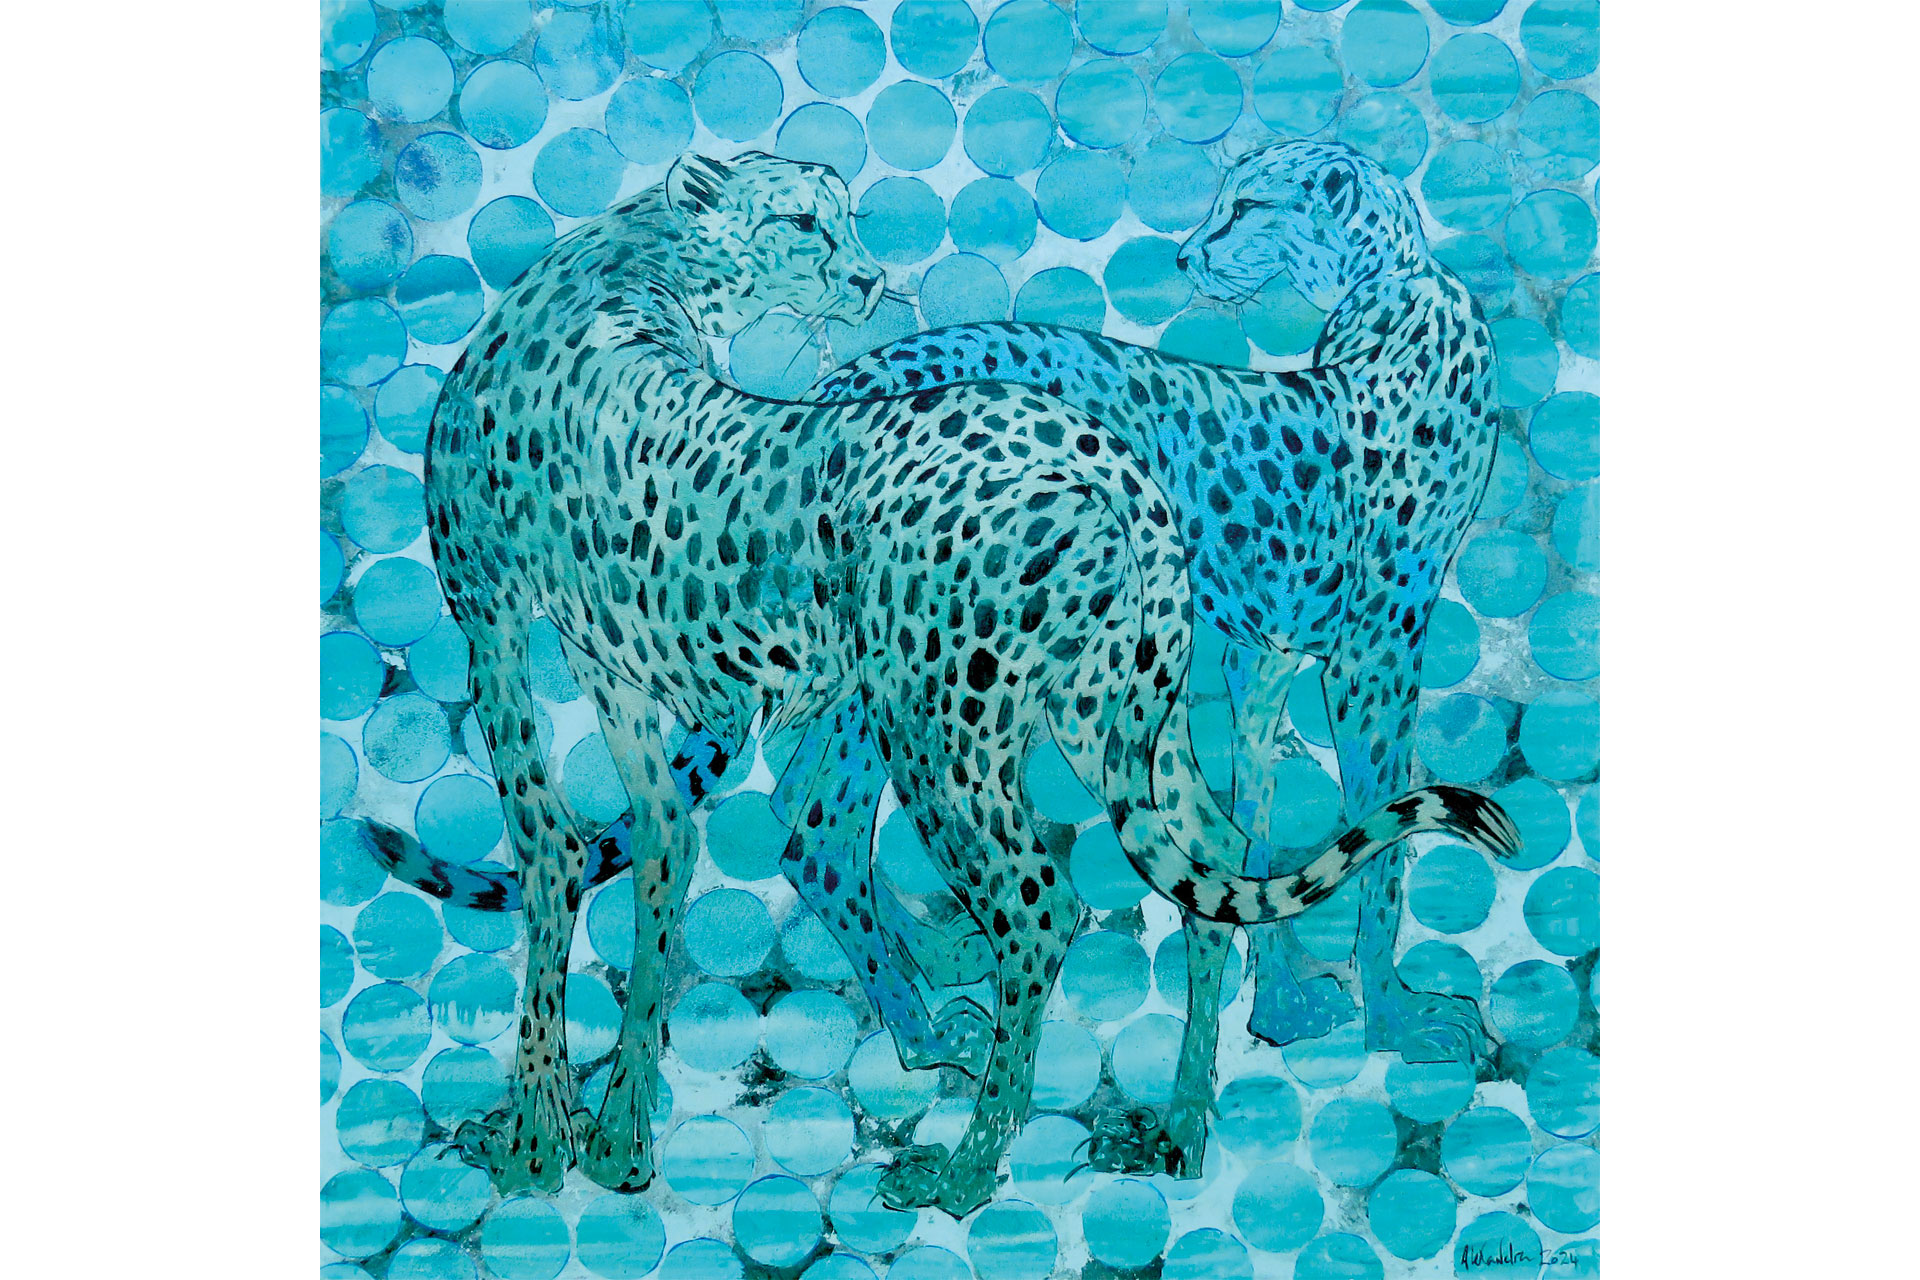 Alexandra Spyratos's painting of cheetahs in blue